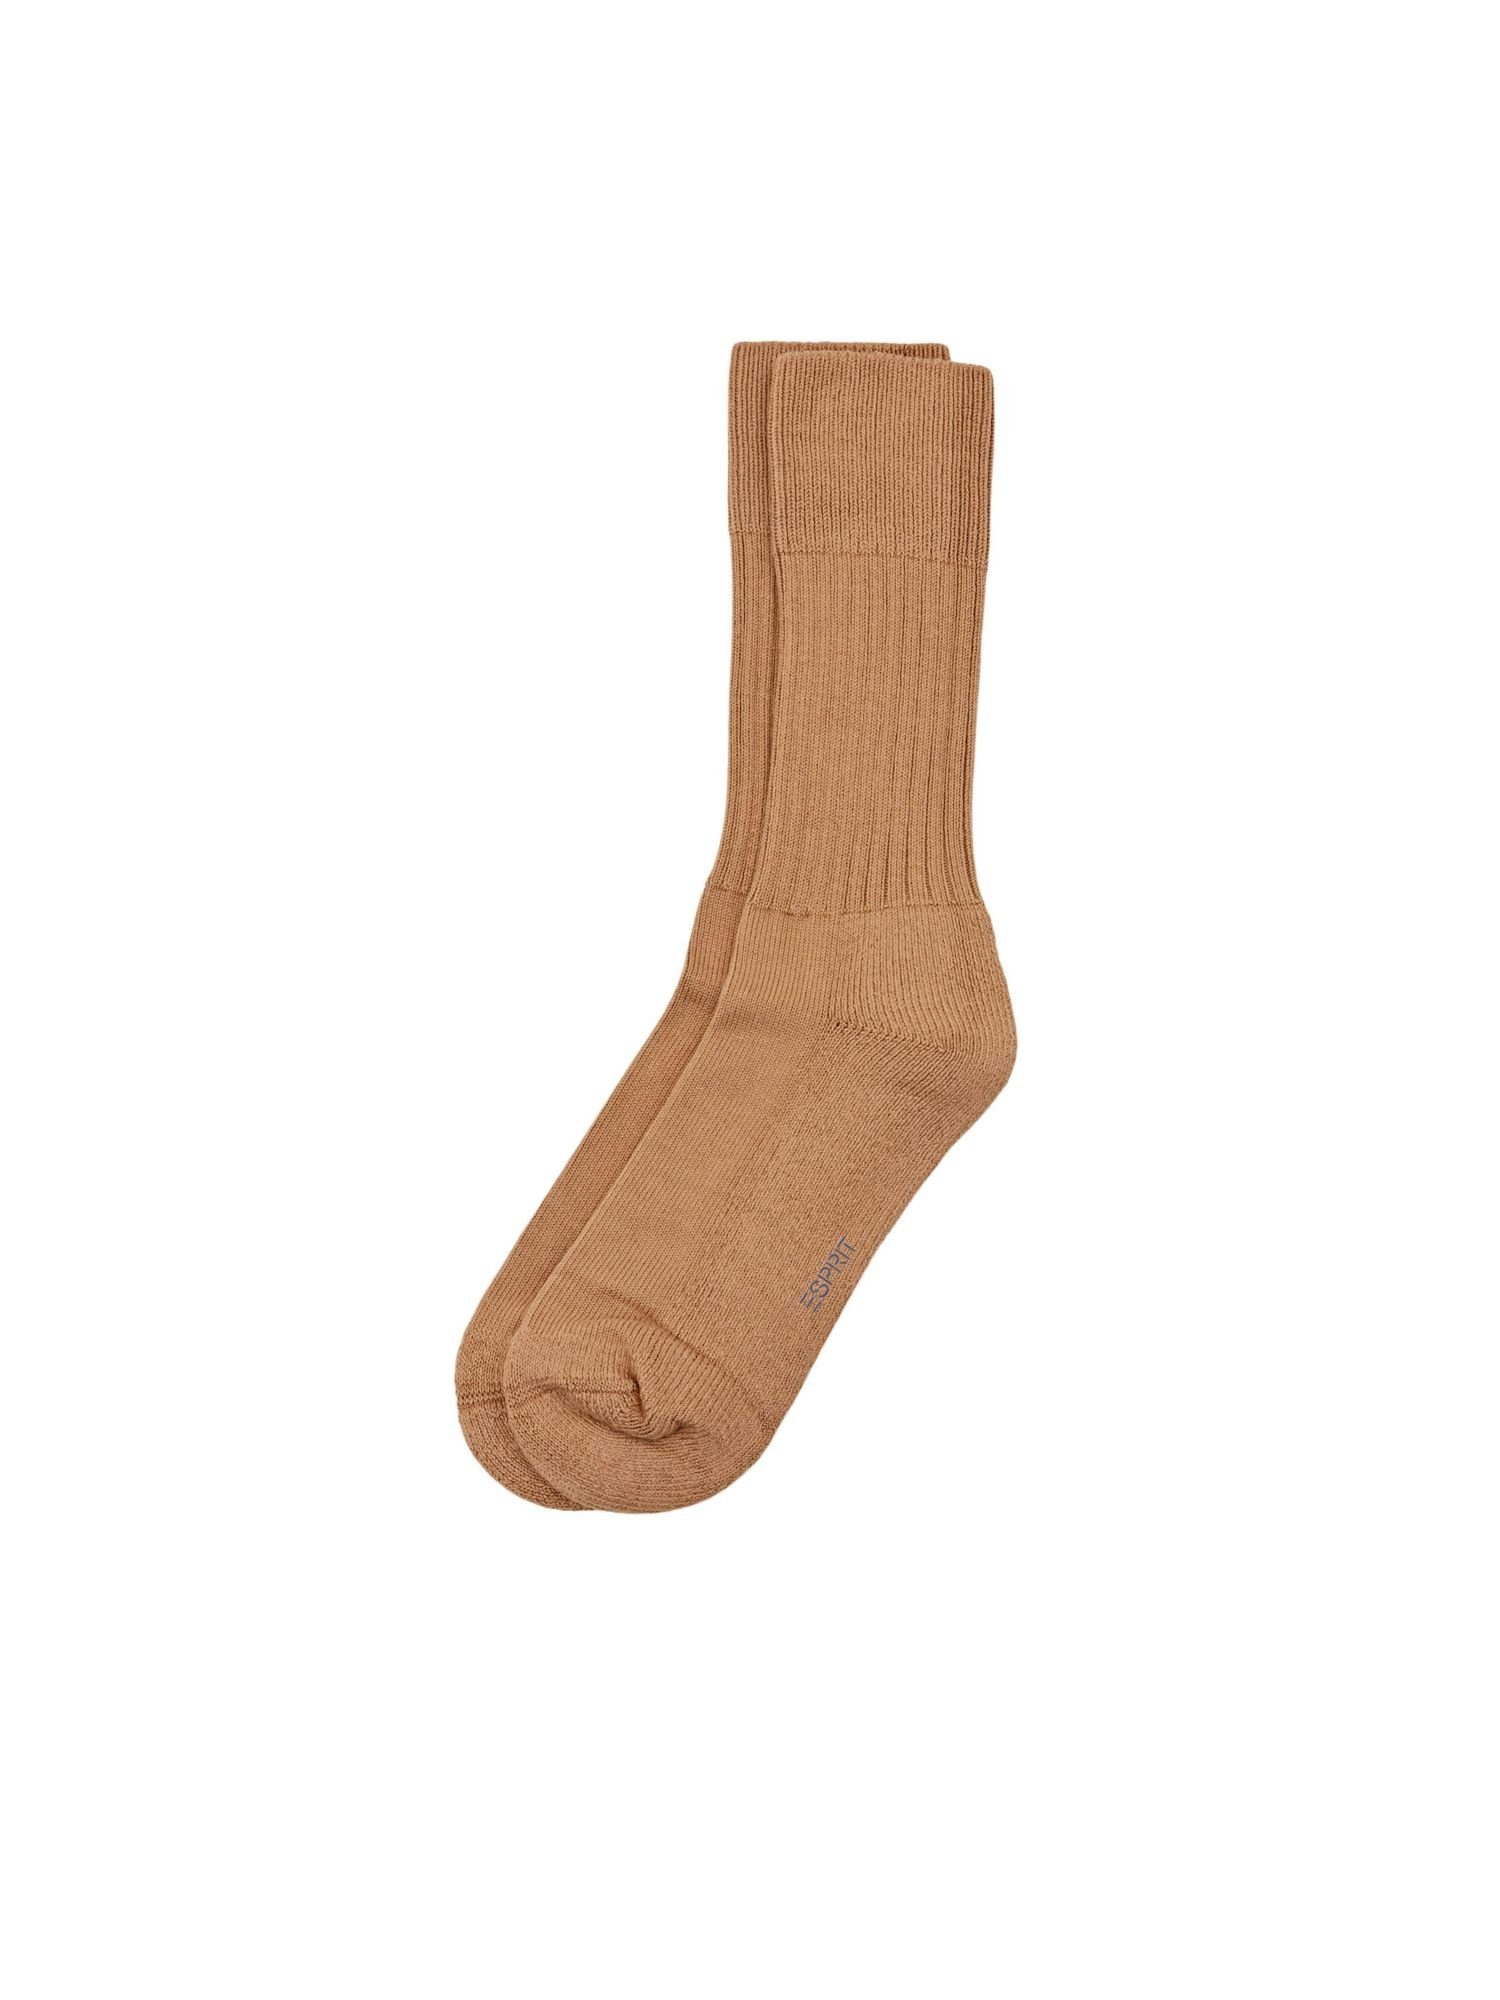 Esprit Socken Socken aus grobem Rippstrick CAMEL